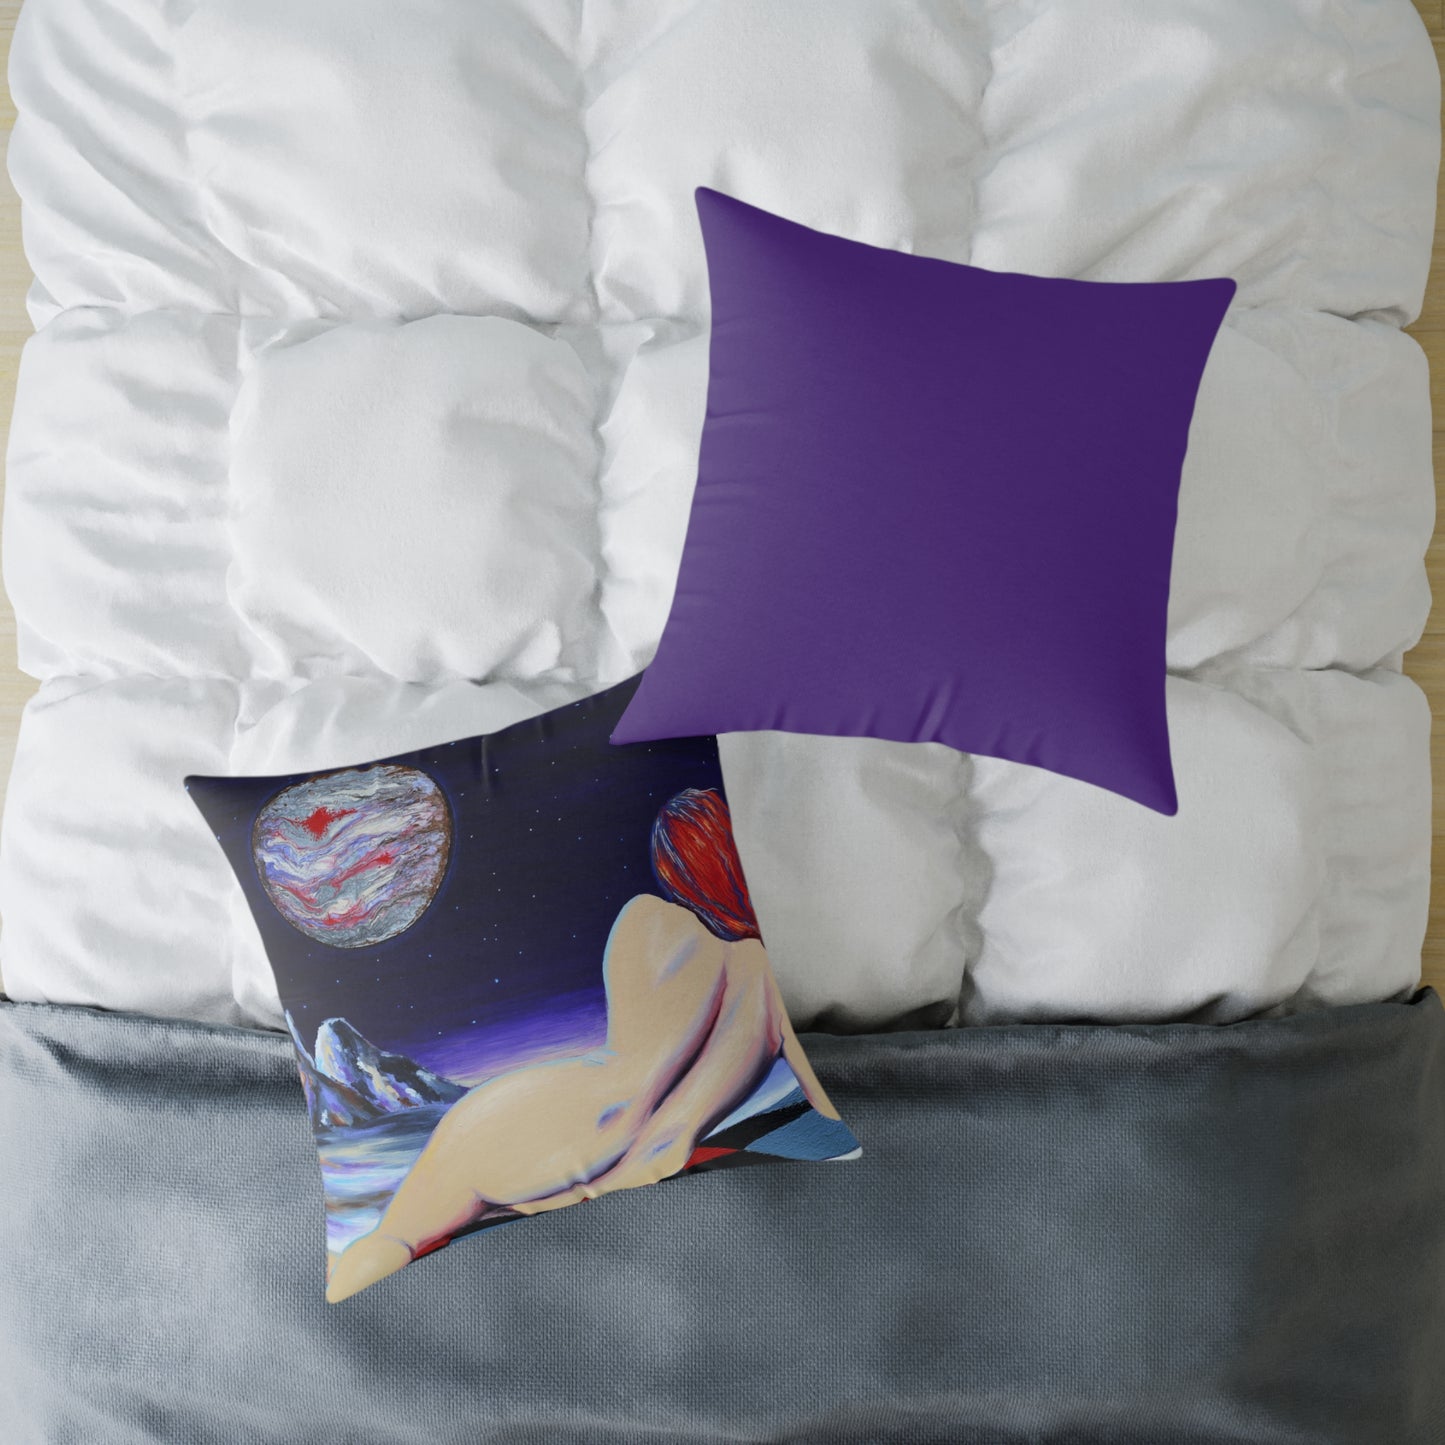 Planet B Polyester Pillow